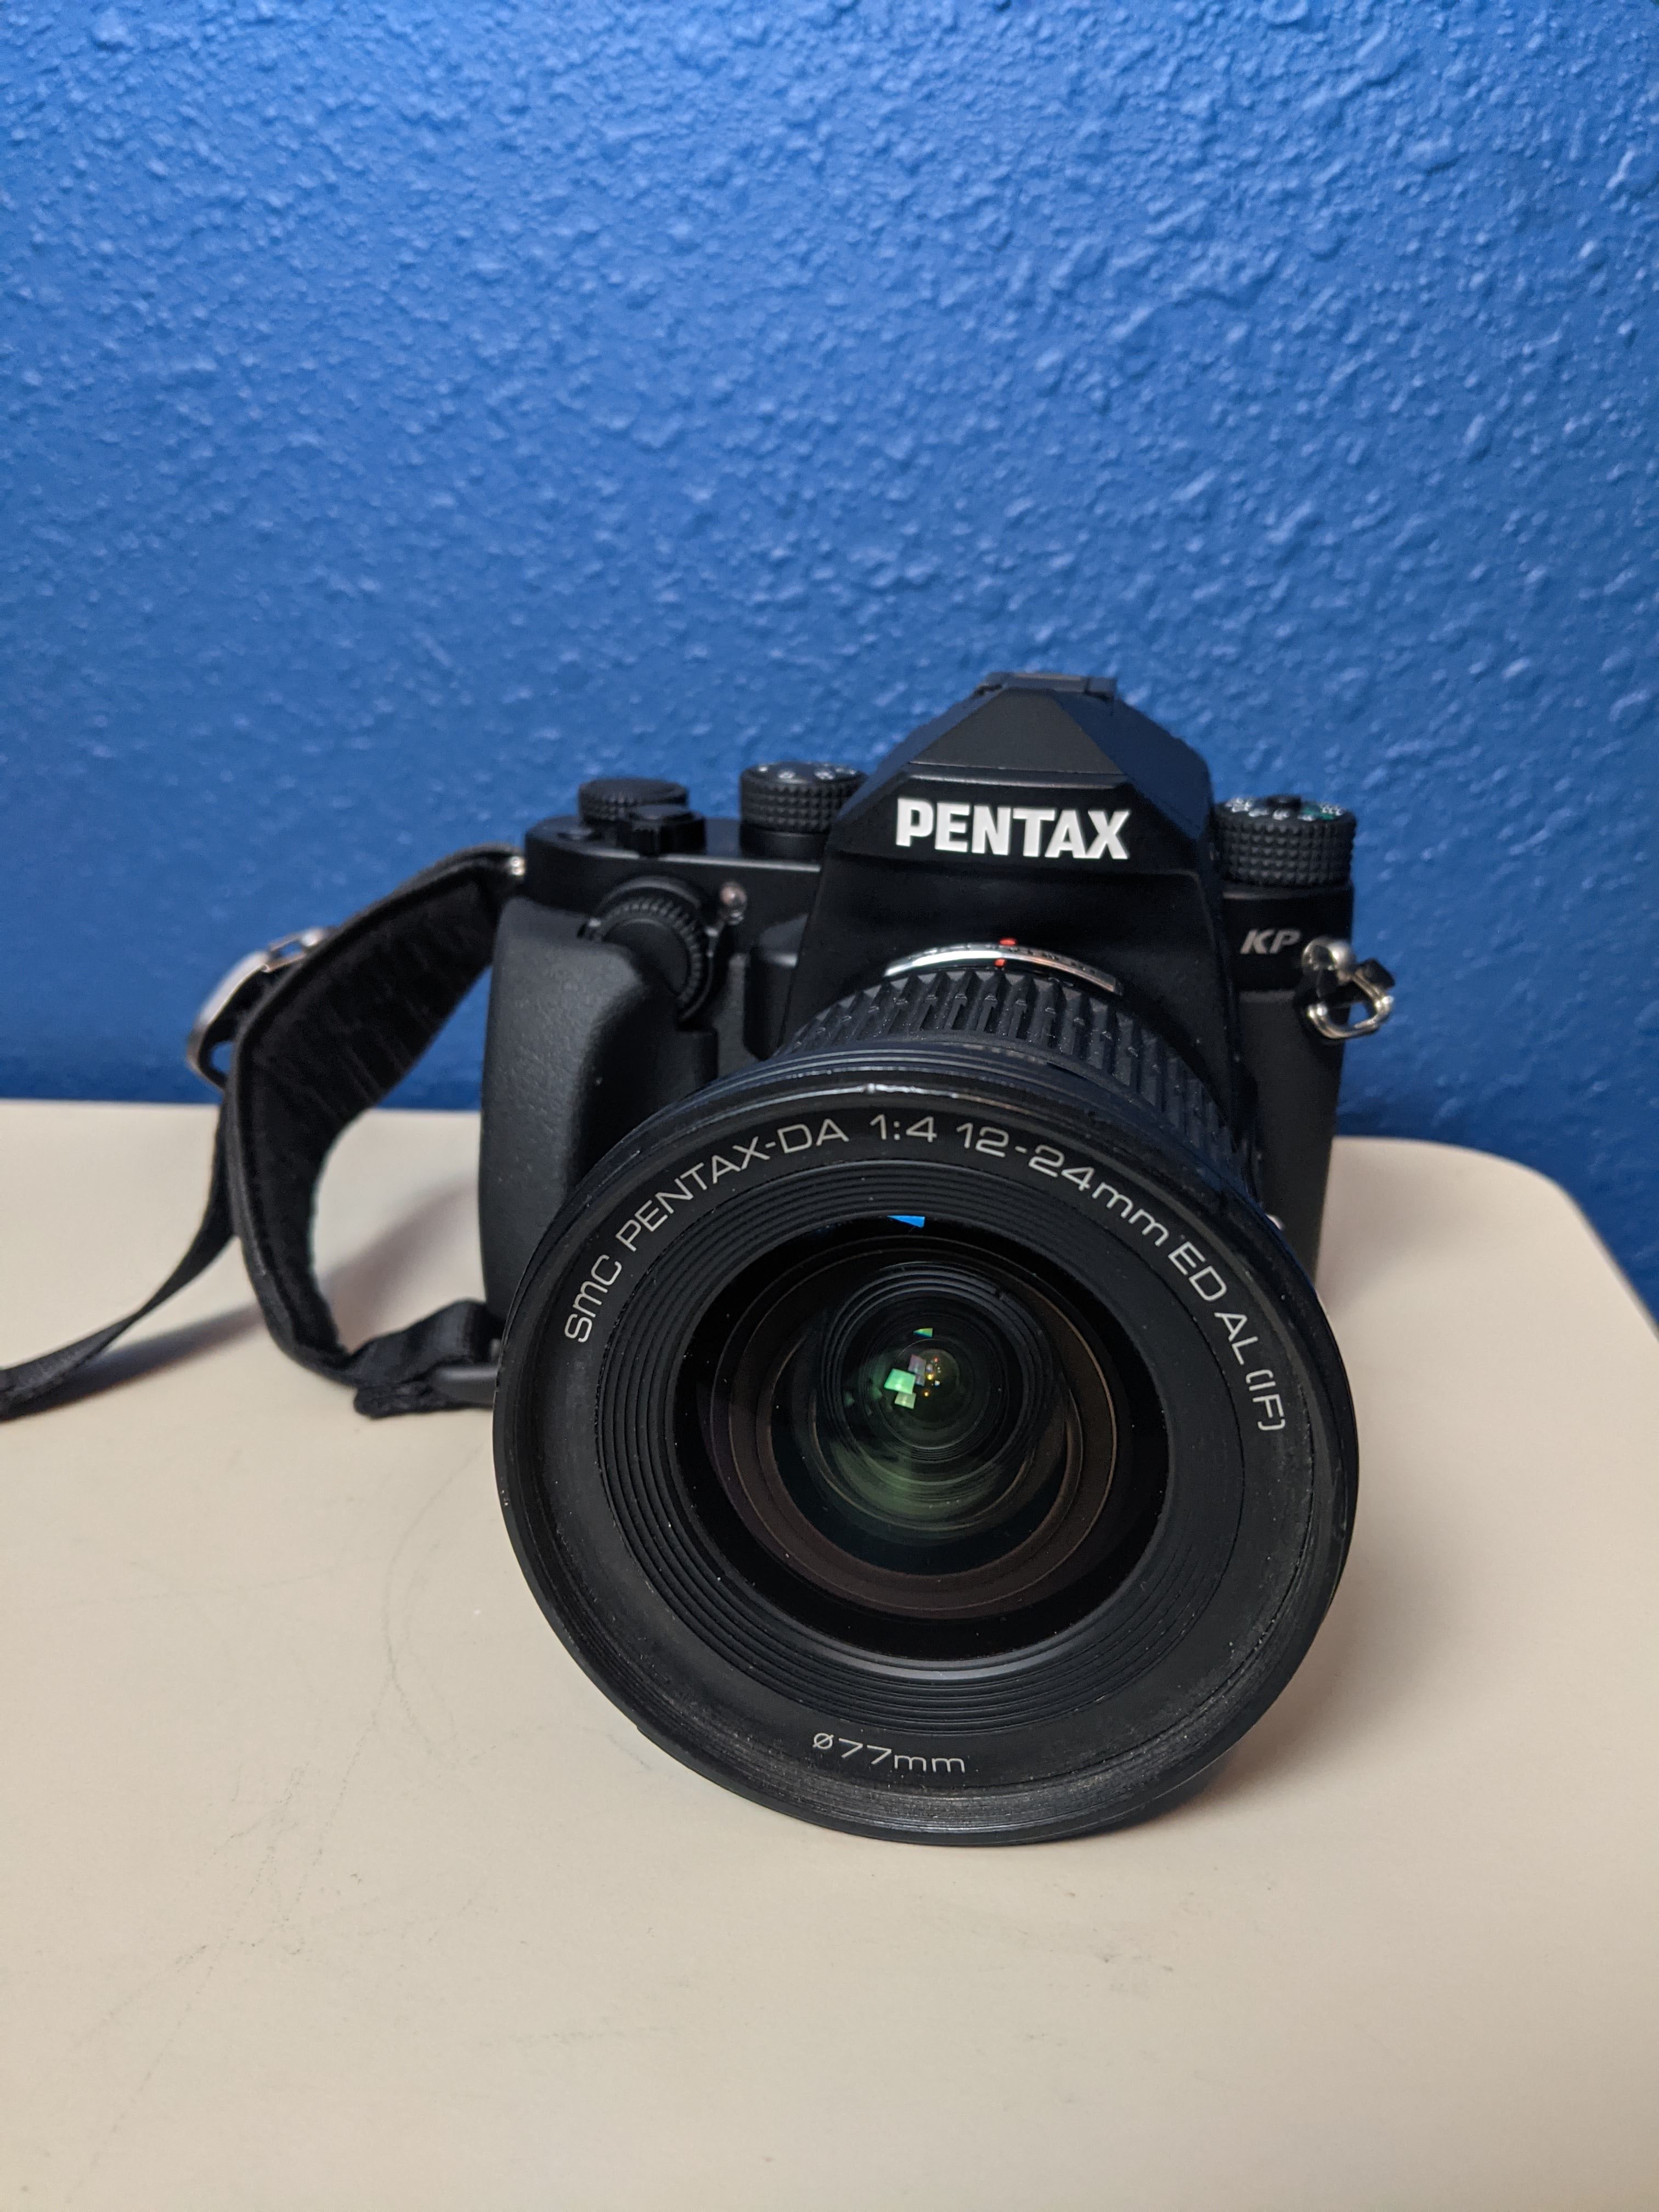 Pentax DA 12-24mm lens mounted on Pentax KP camera